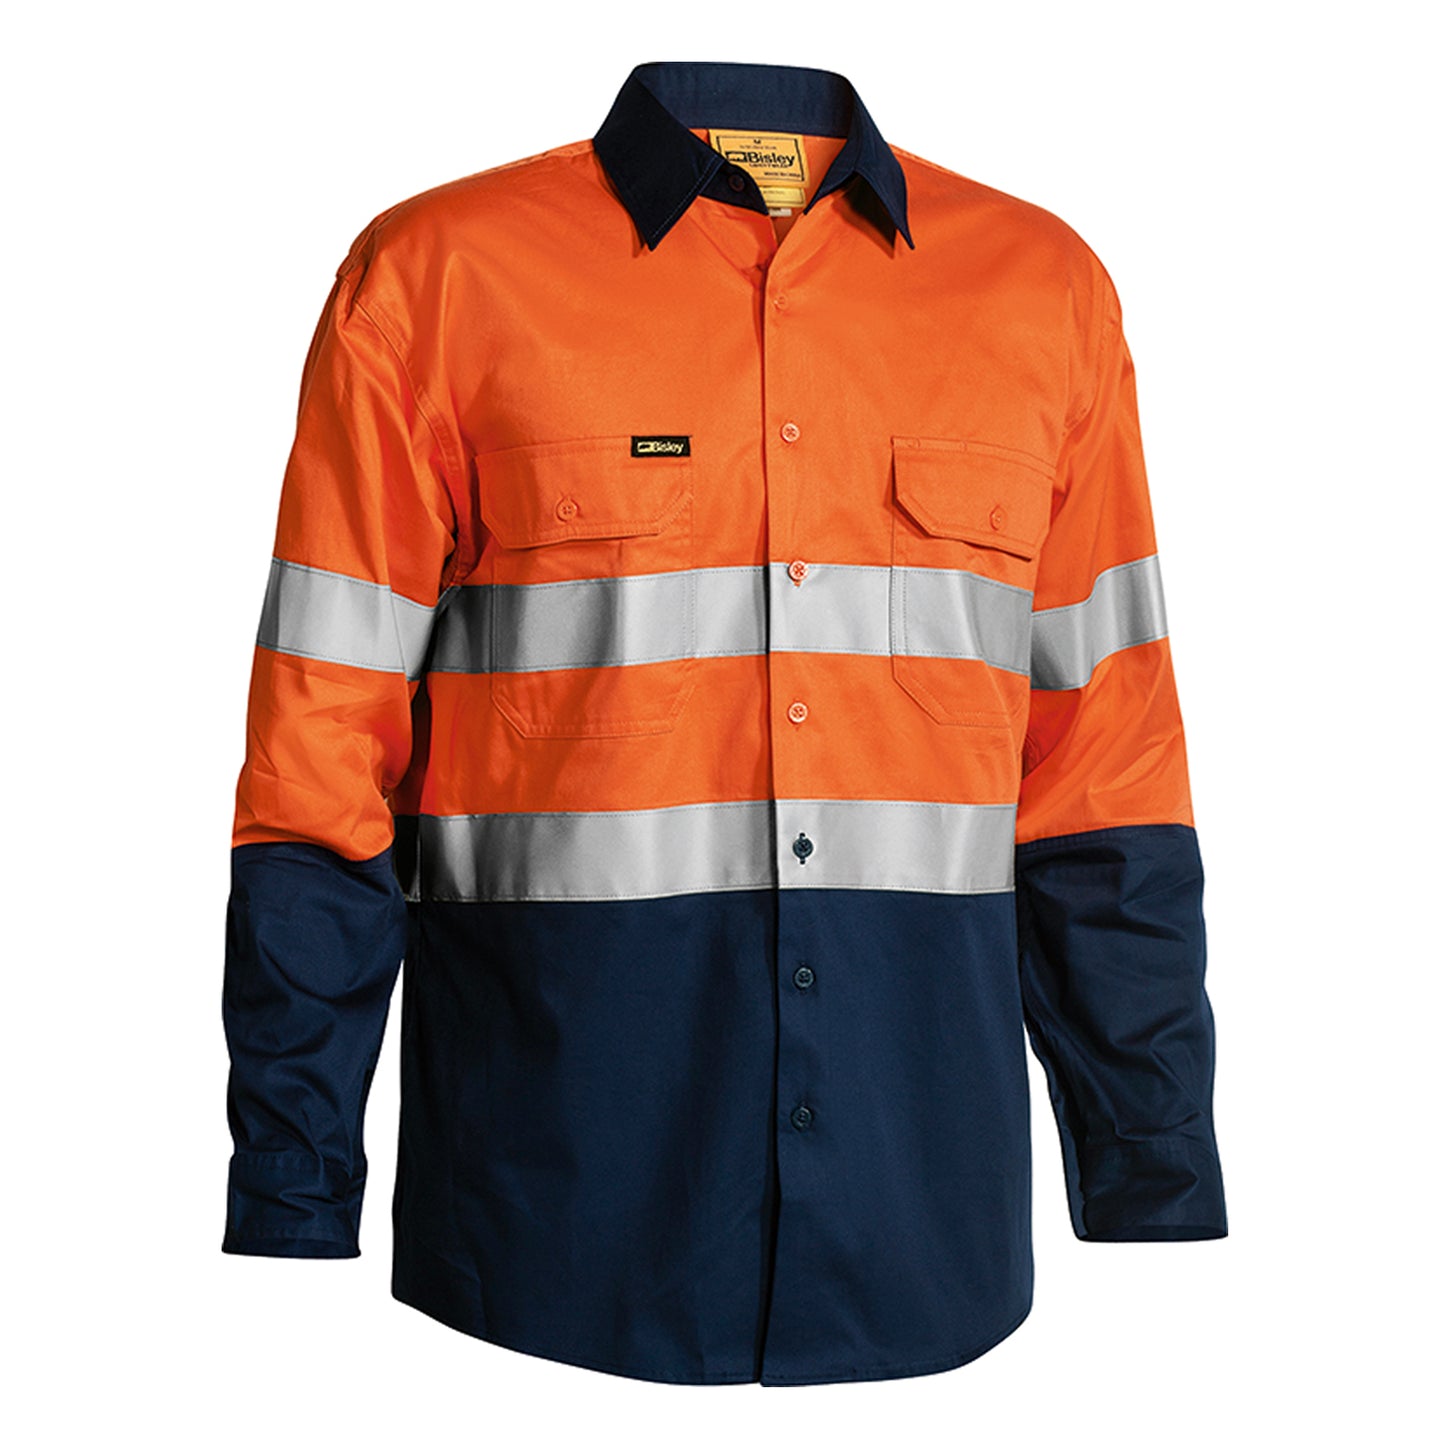 Bisley - Taped Hi Vis Cool Lightweight Long Sleeve Shirt (Orange/Navy)